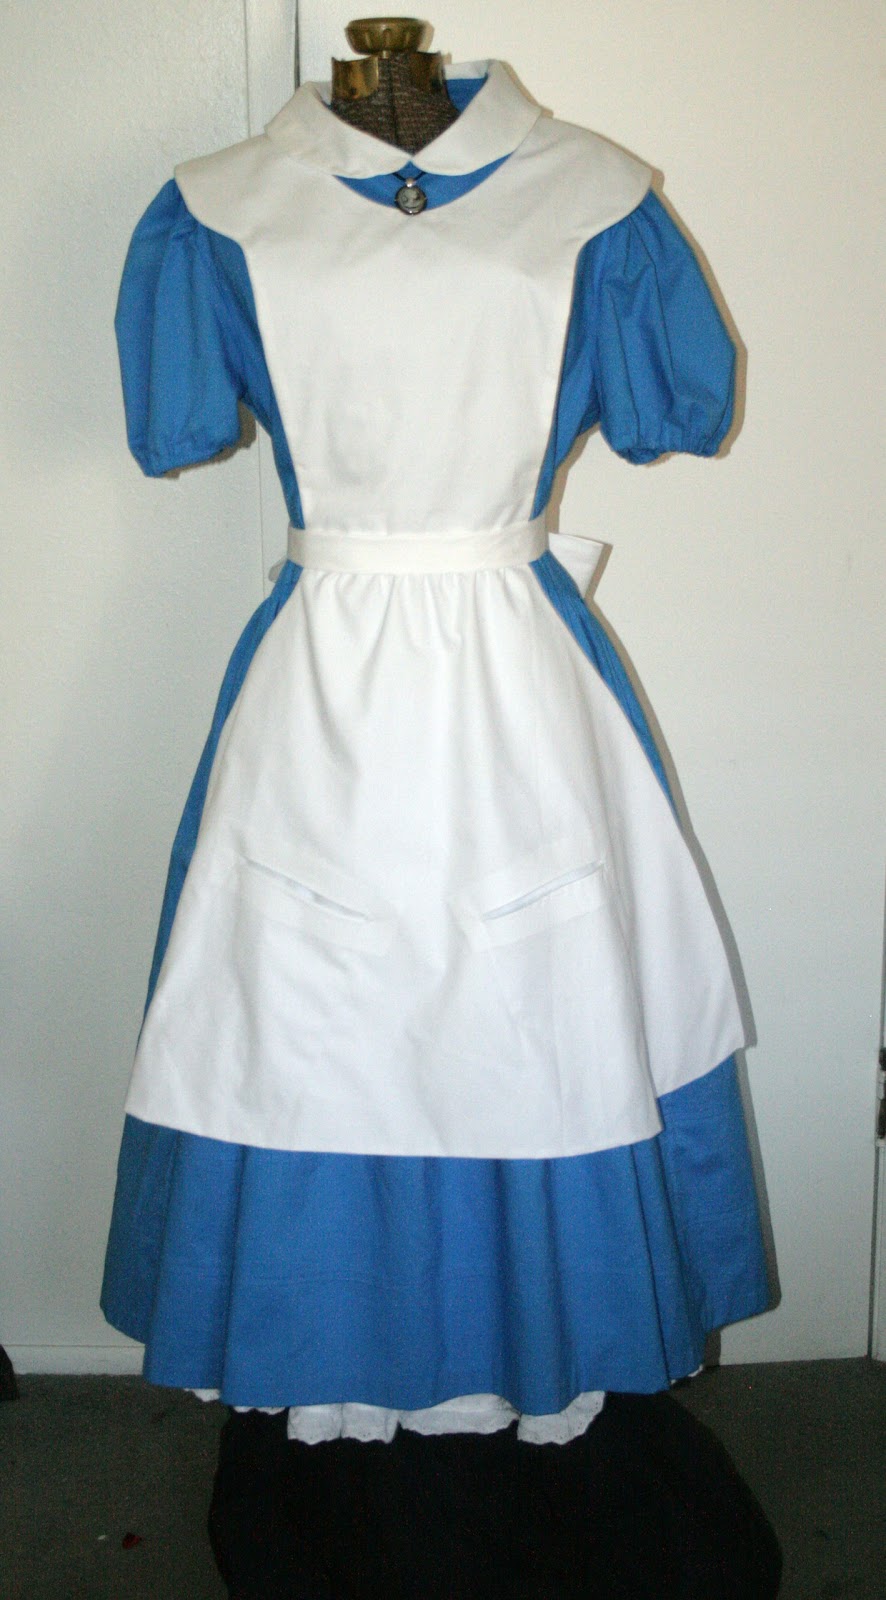 Creative Custom Costumes and Consulting: Alice in Wonderland Costume